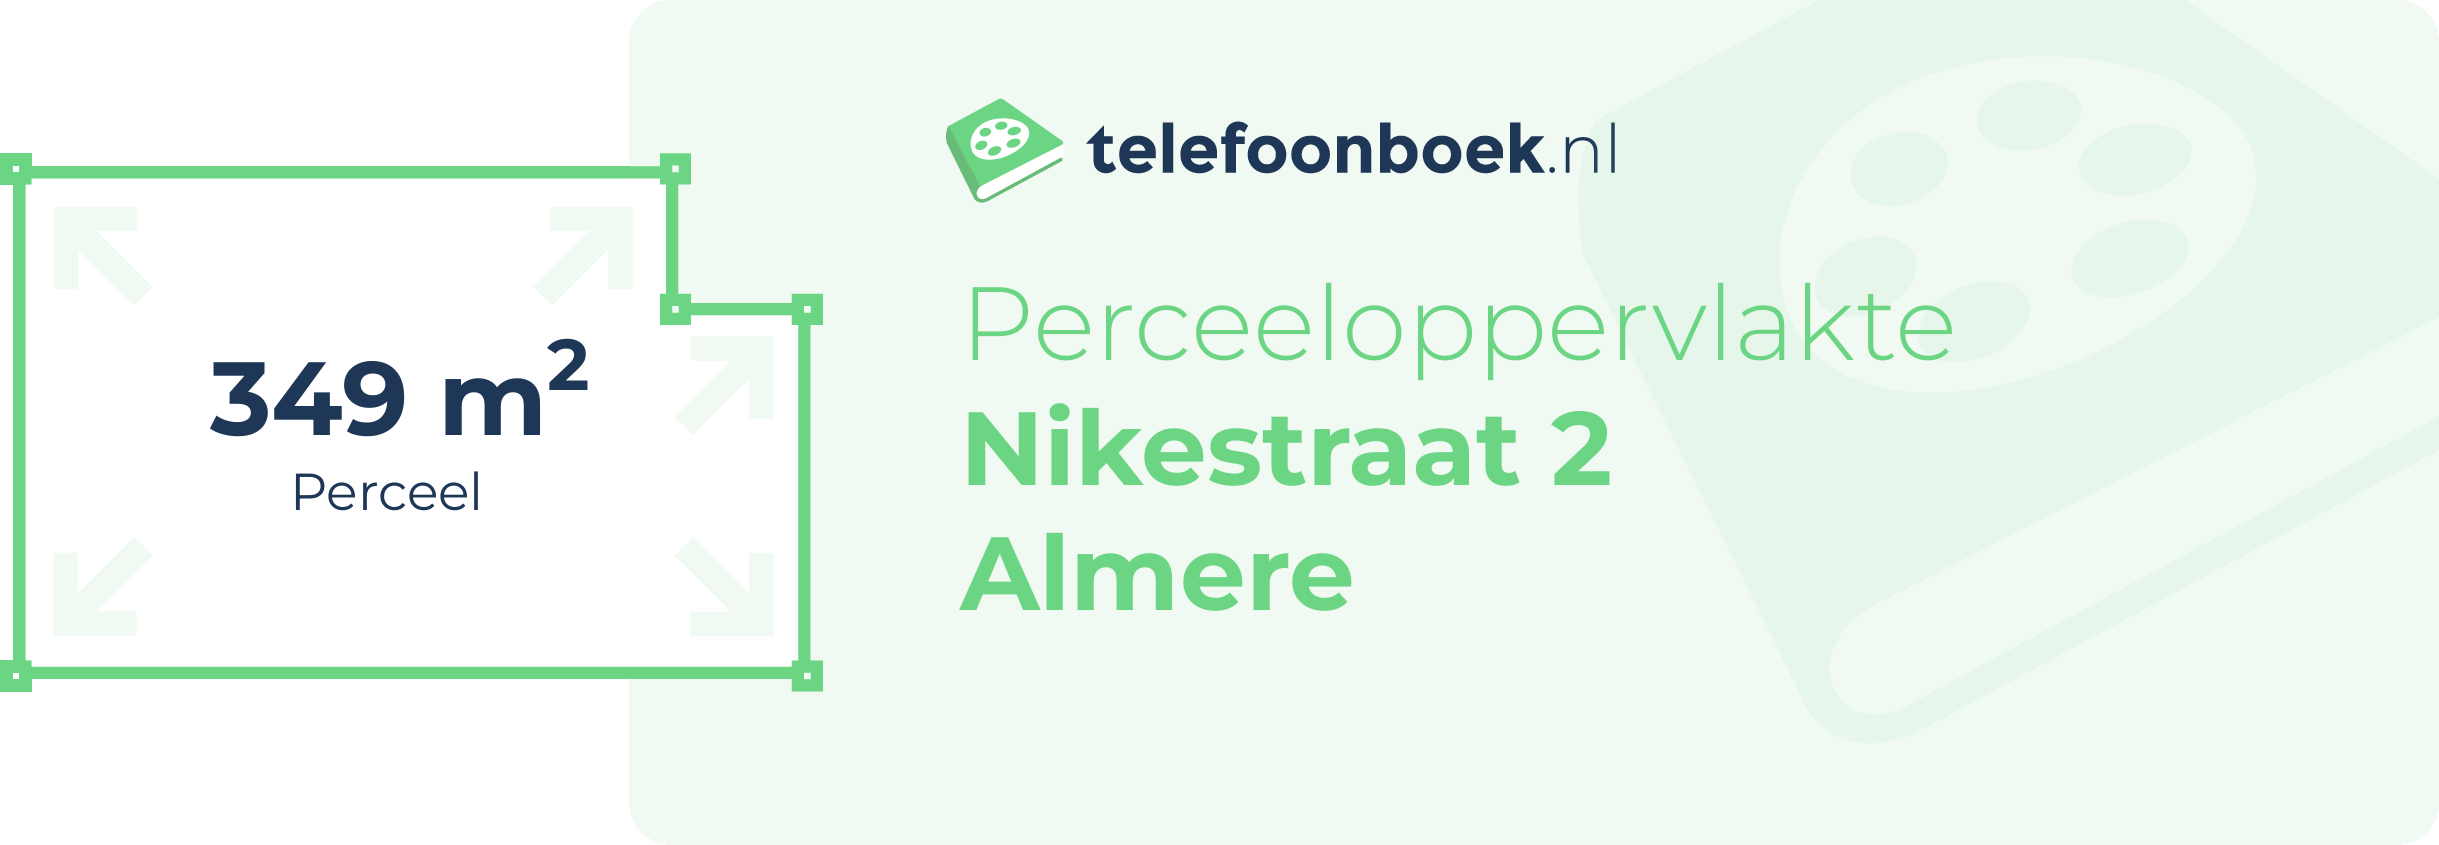 Perceeloppervlakte Nikestraat 2 Almere